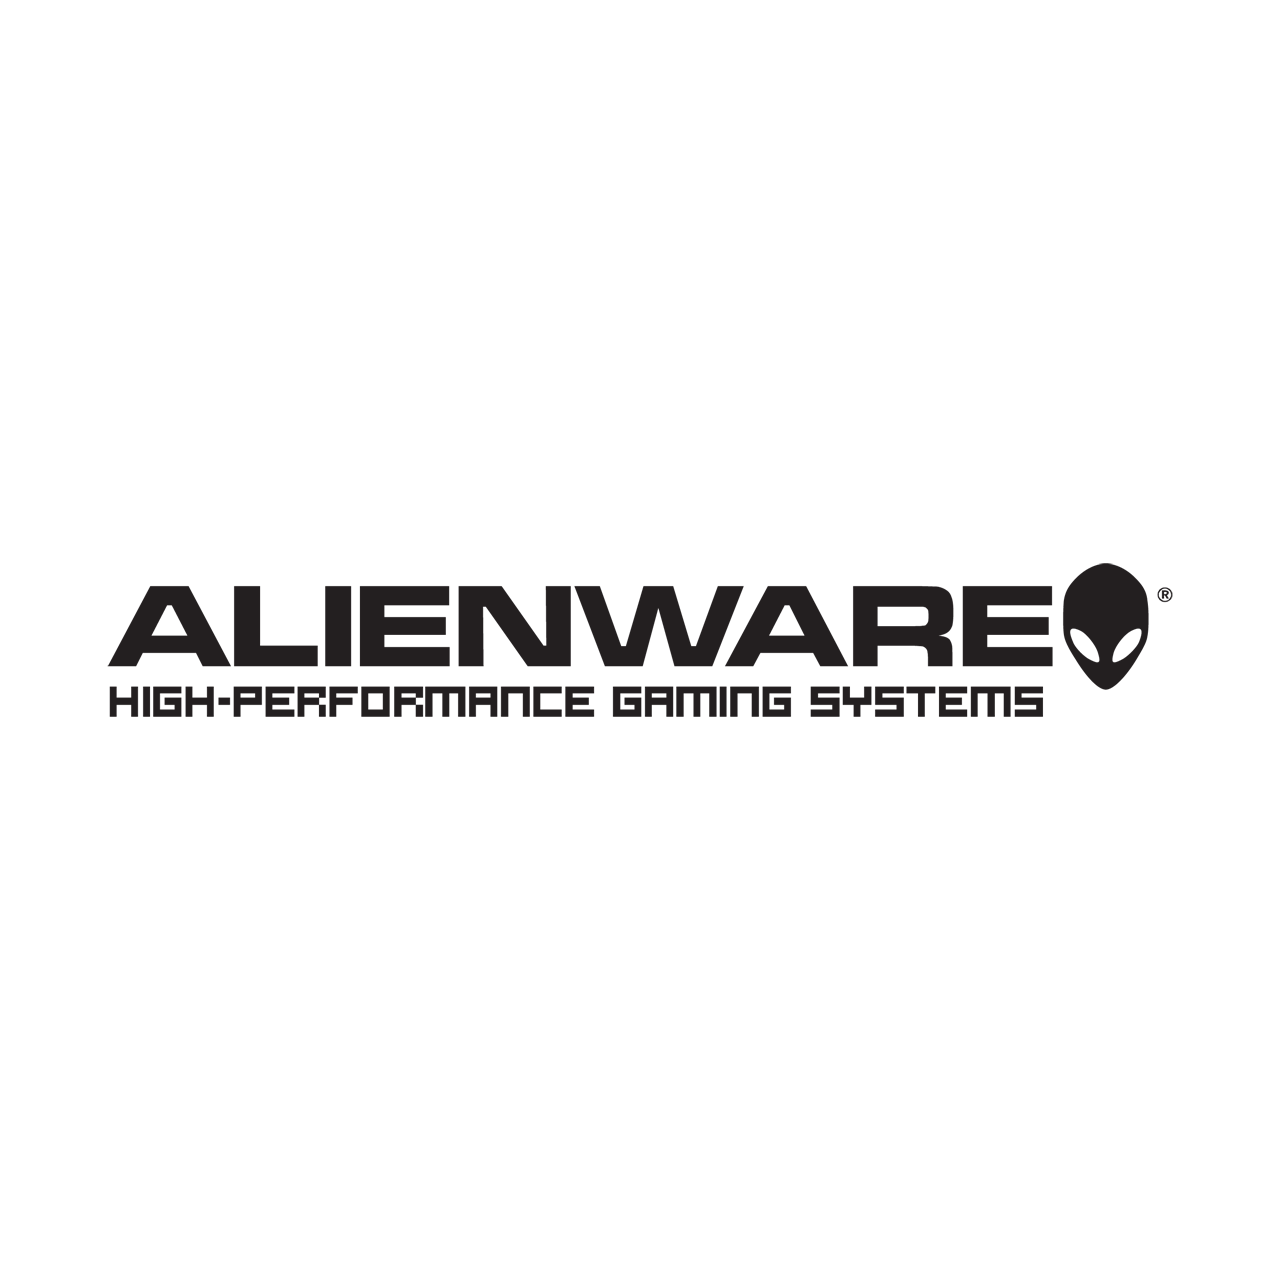 Alienware logo PNG descargar imagen